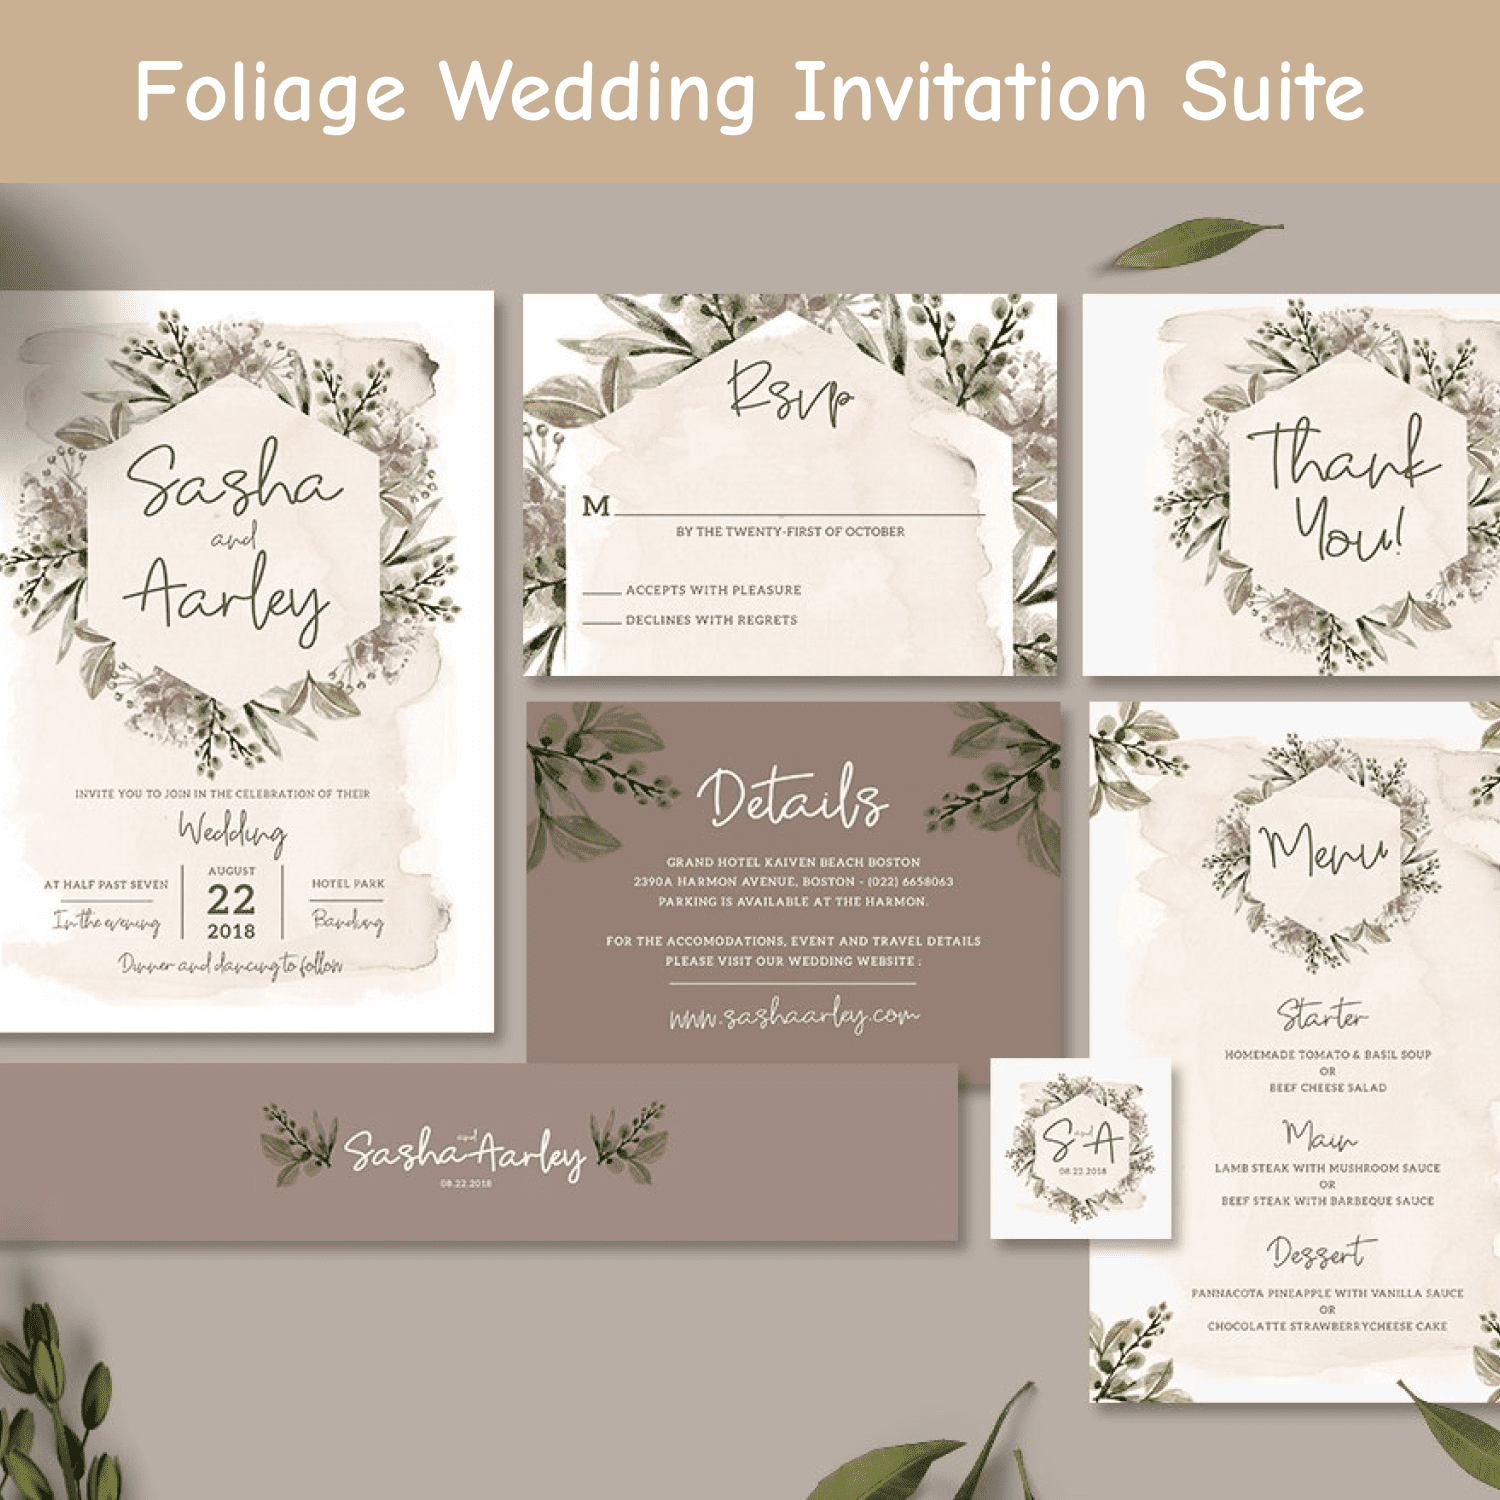 Foliage Wedding Invitation Suite cover image.